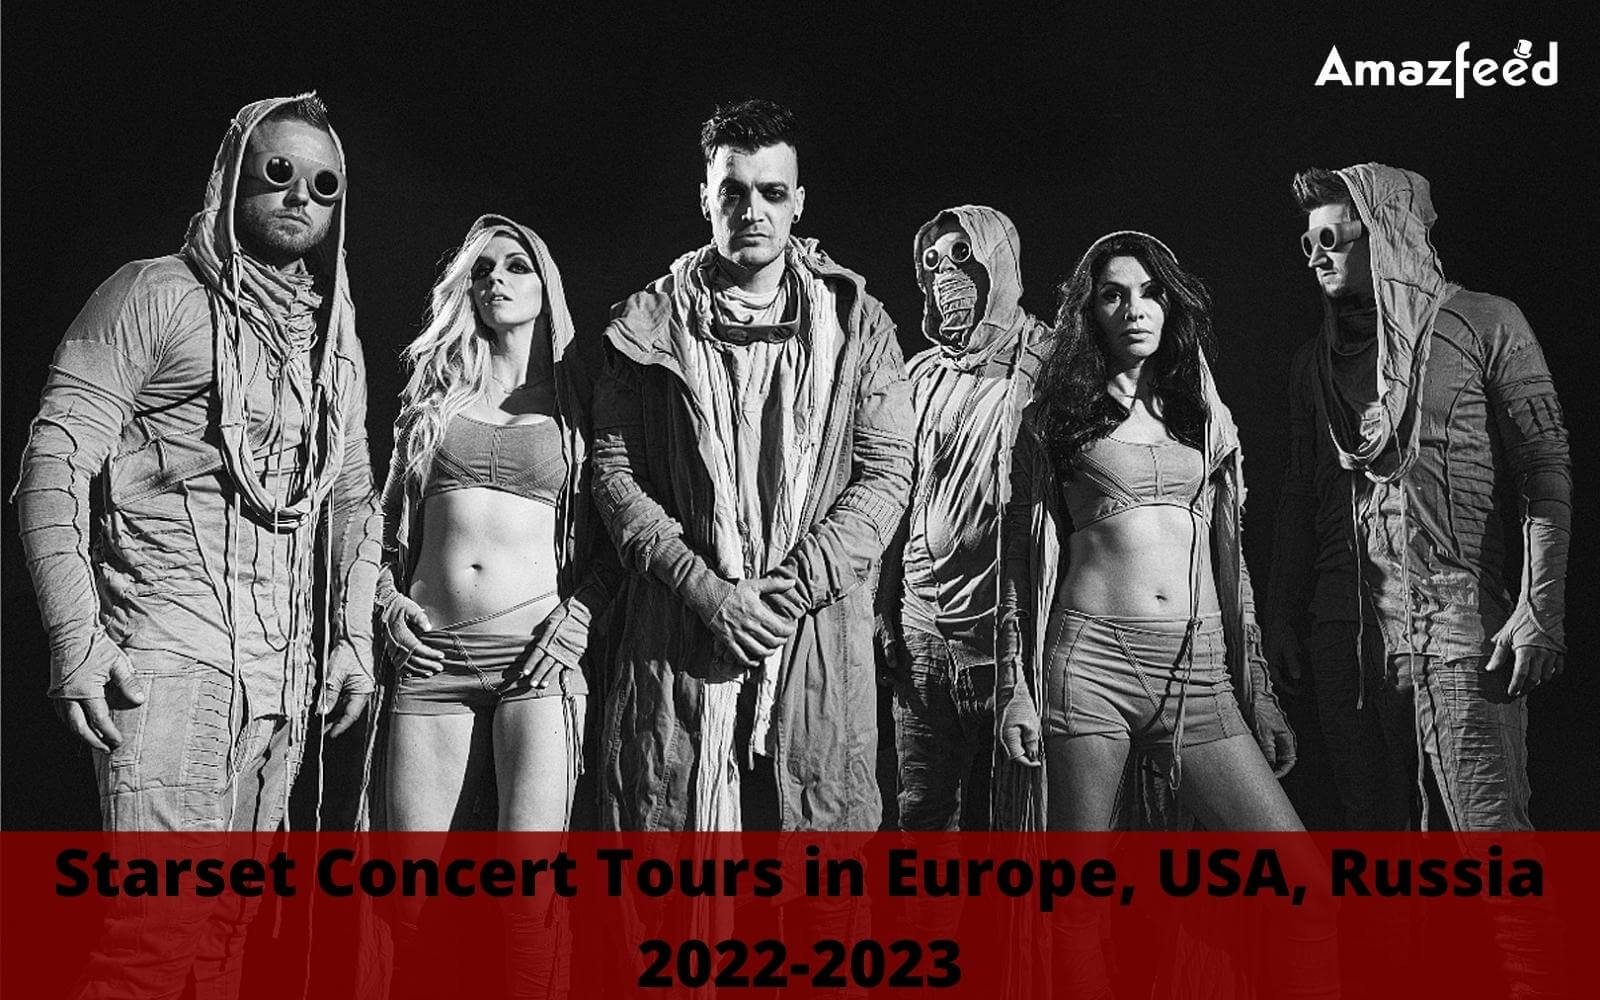 Starset Setlist 202223, Concert Tour Dates in 20222023 Europe, USA